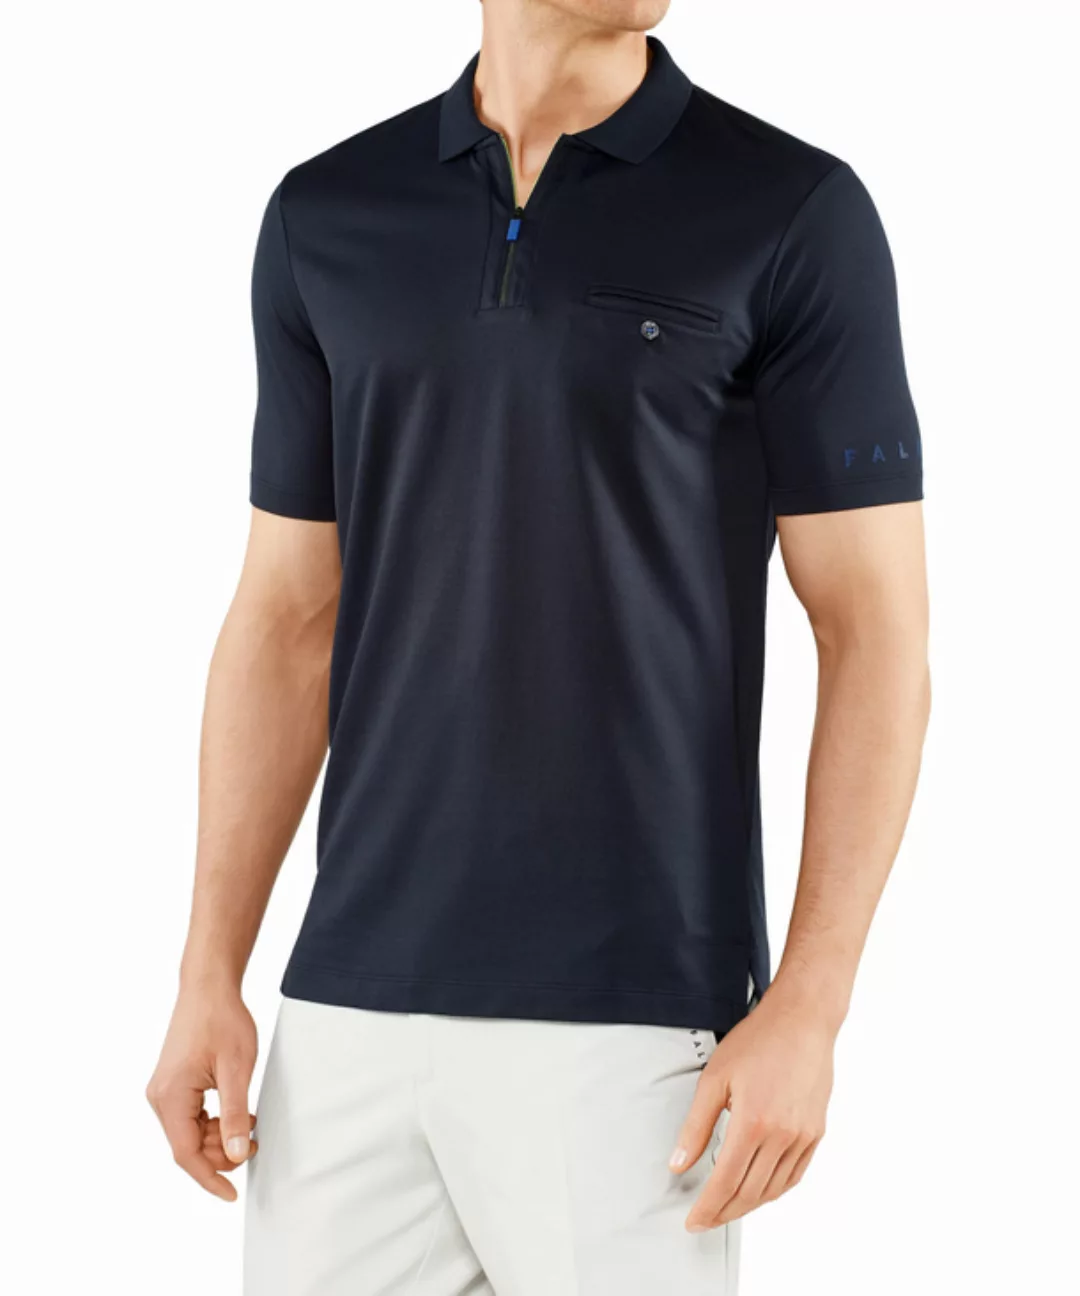 FALKE Herren Polo Shirt Polo, L, Blau, Baumwolle, 37583-643704 günstig online kaufen